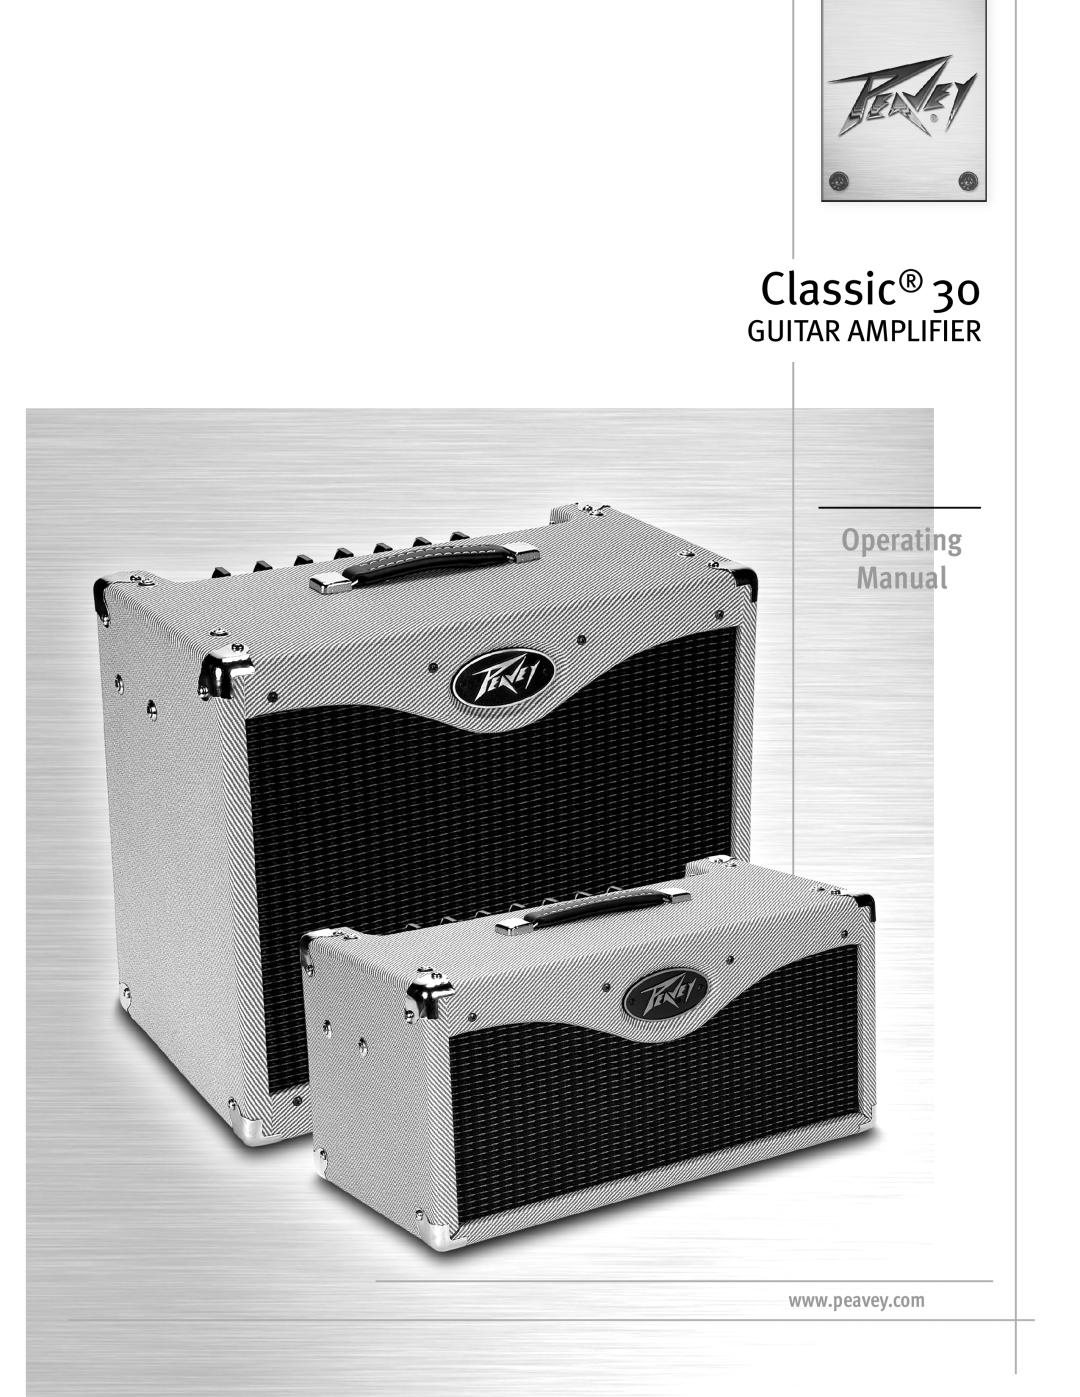 Peavey Classic 30 manual Operating Manual, Guitar Amplifier 